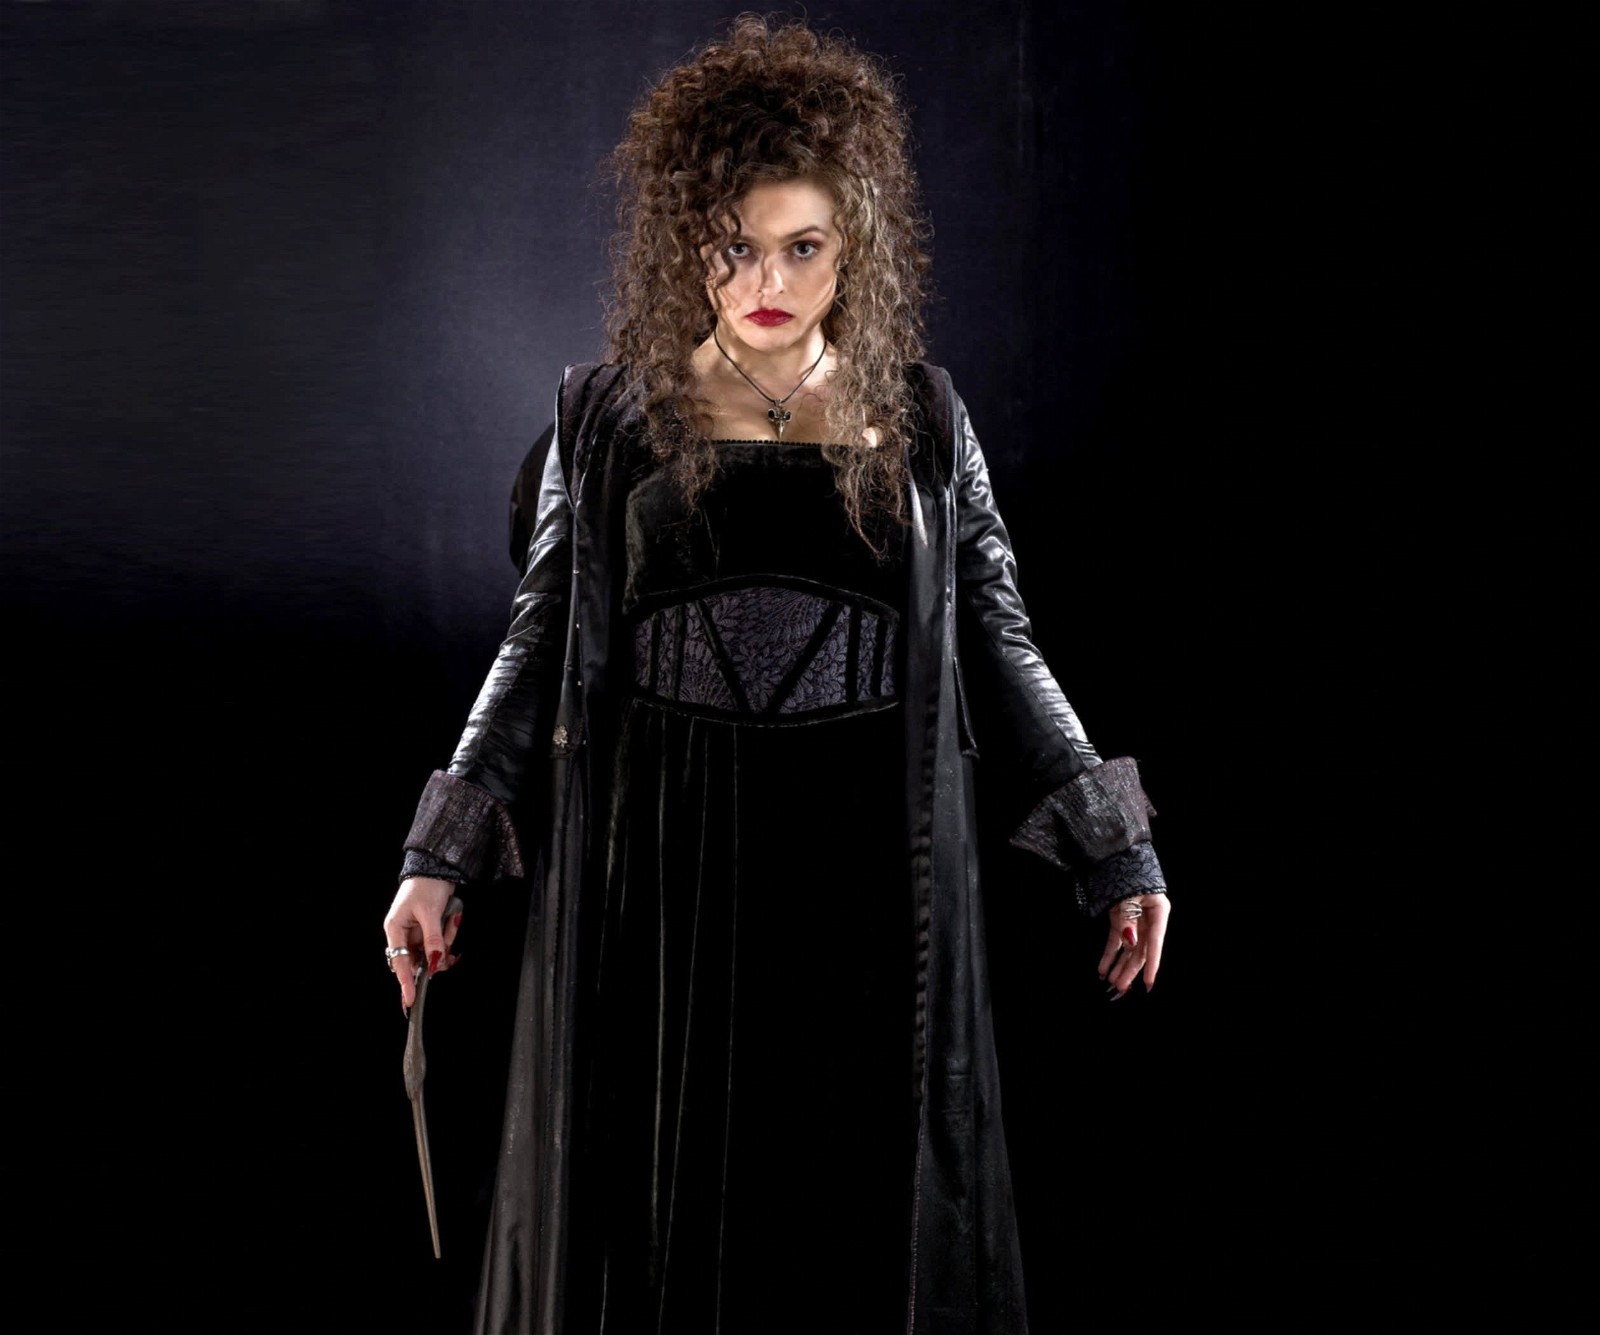 Helena Bonham Carter as Bellatrix Lestrange in the Harry Potter franchise.